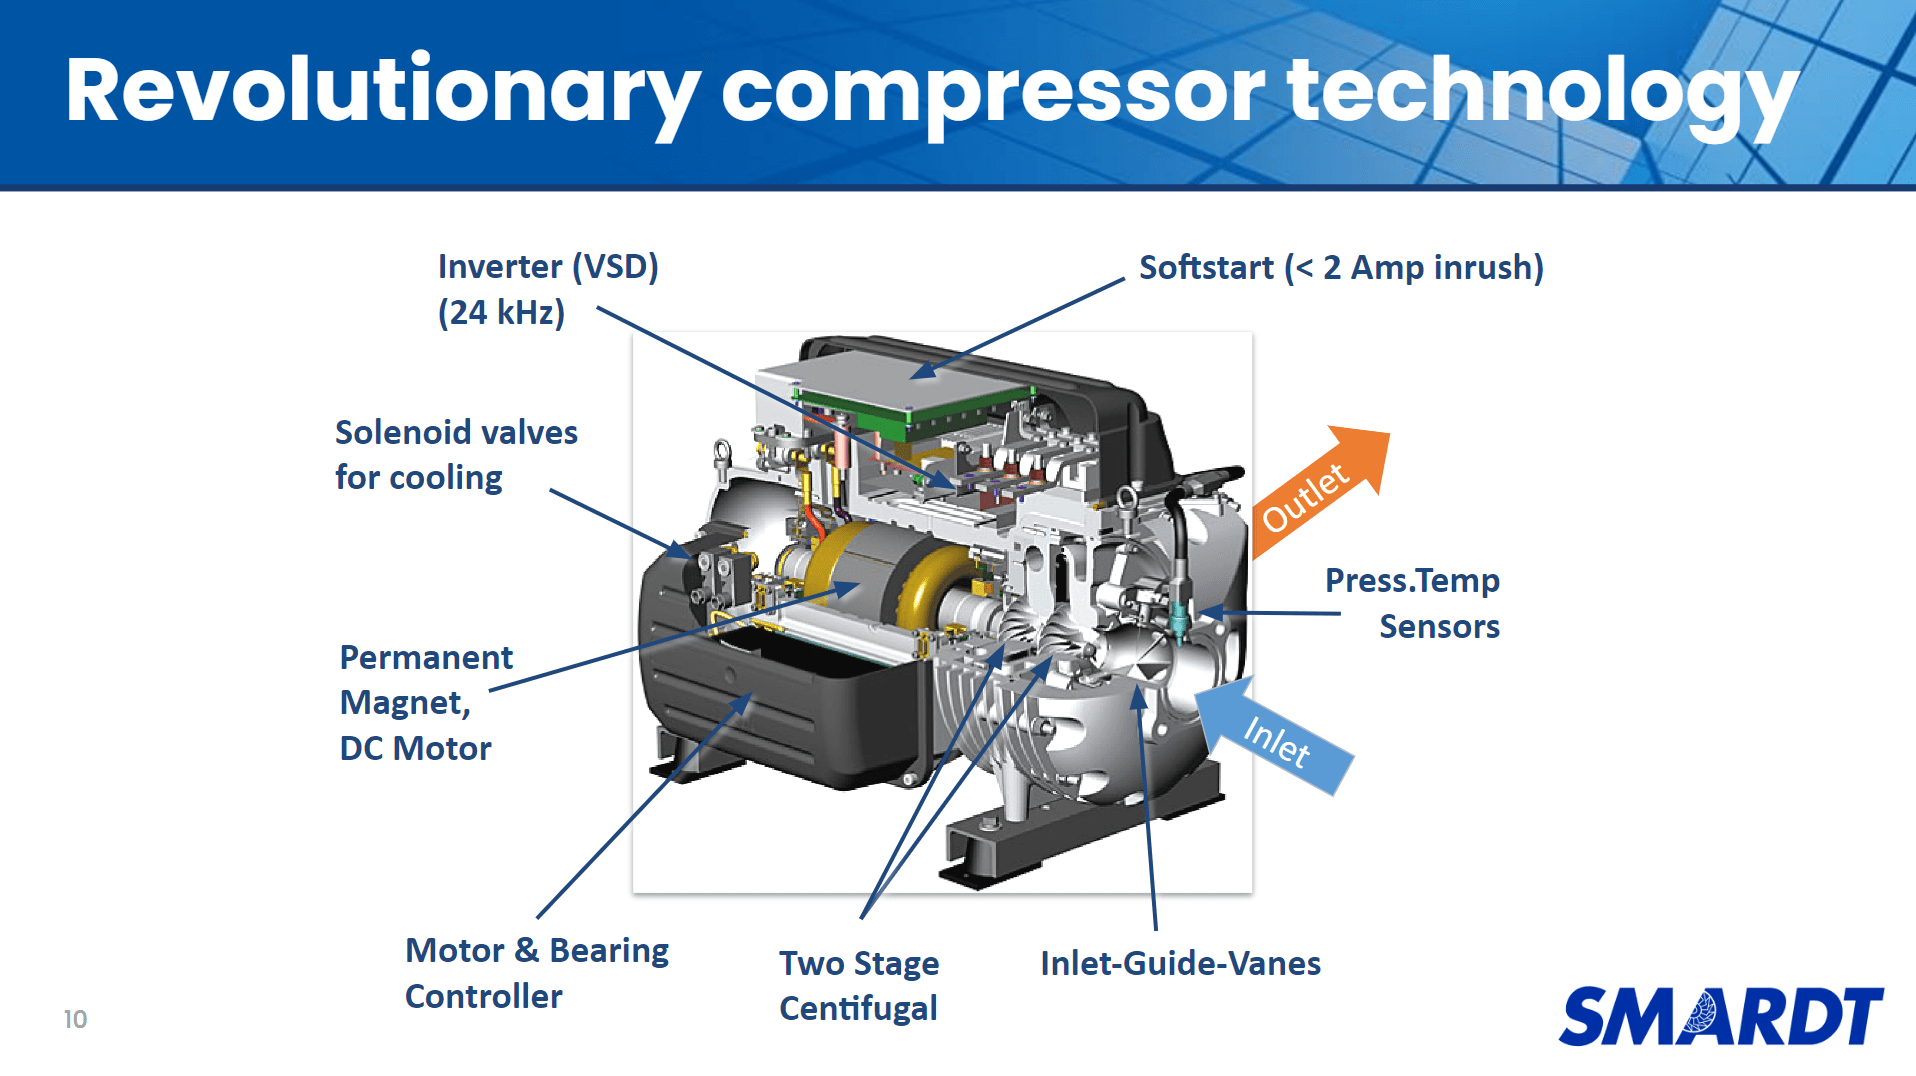 SMARDT's Compressor technology